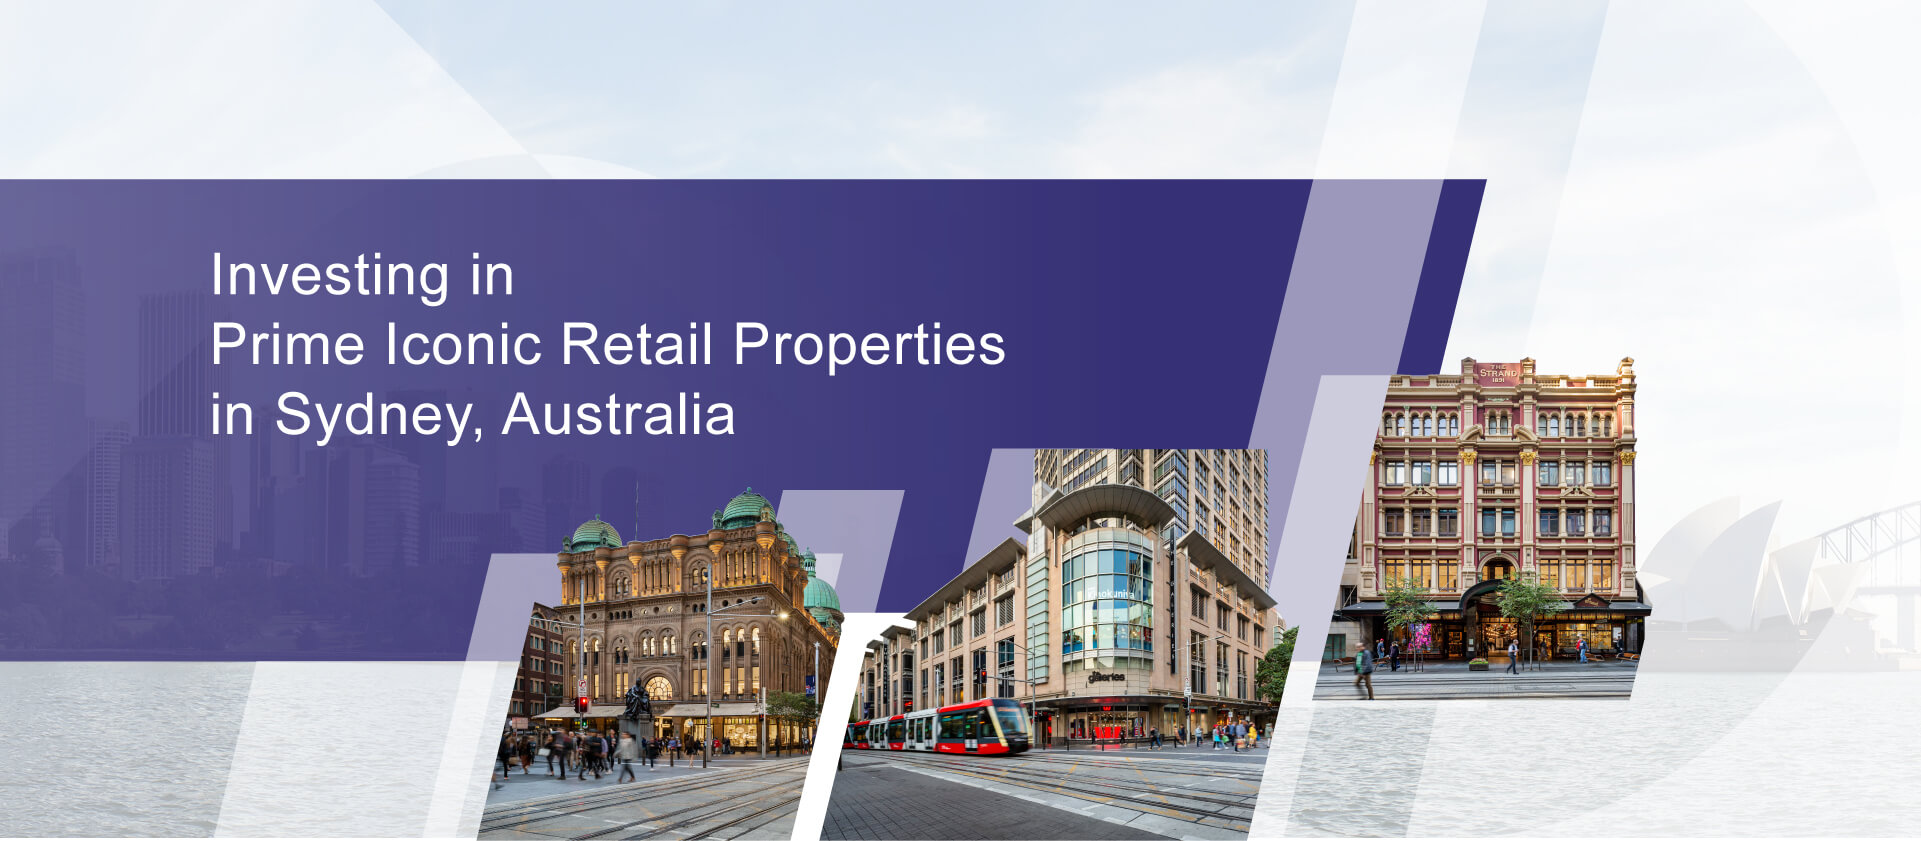 Investing in Prime Iconic Retail Properties in Sydney, Australia